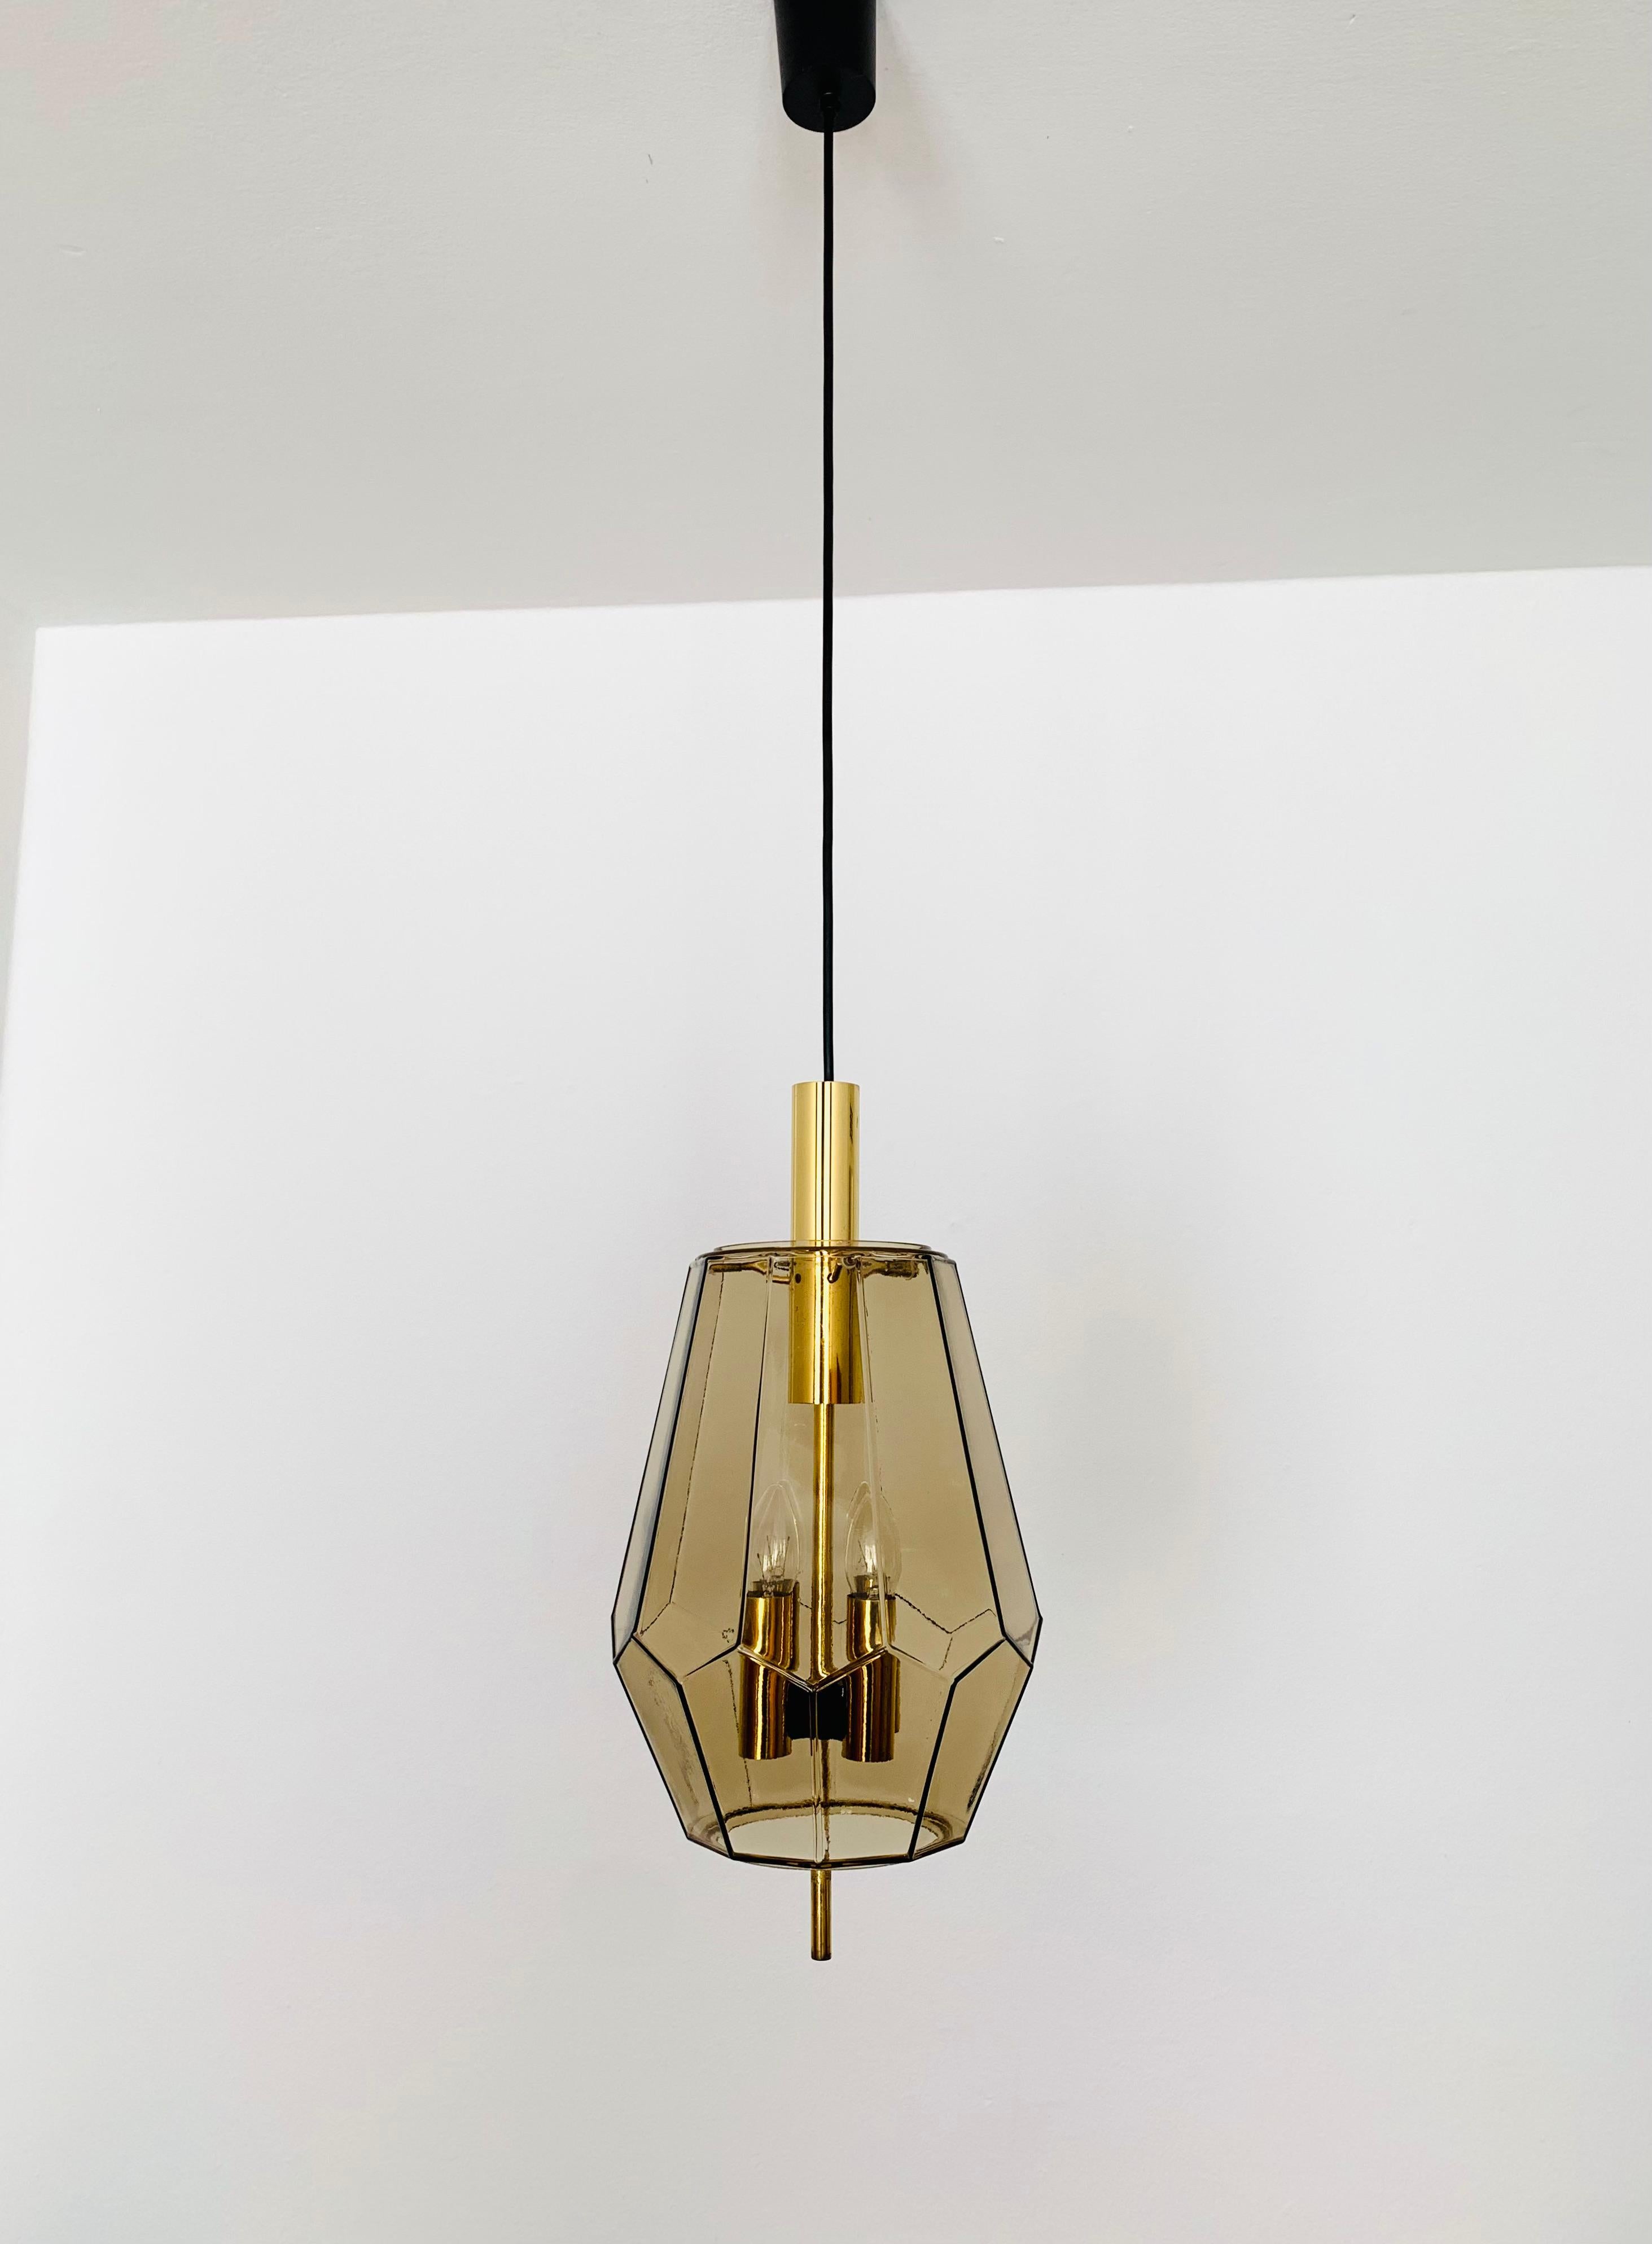 German Set of 2 Smoked Glass Pendant Lamps by Glashütte Limburg For Sale